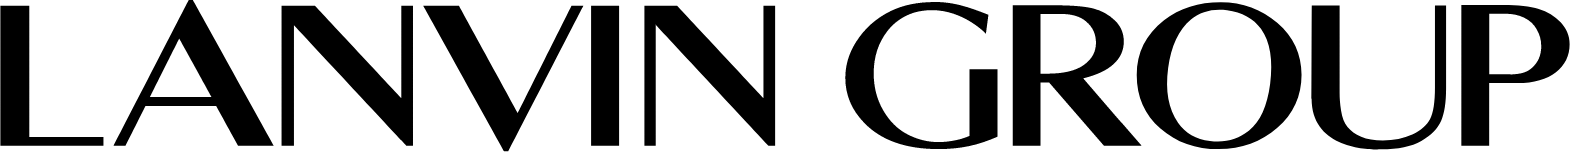 Lanvin Group logo large (transparent PNG)